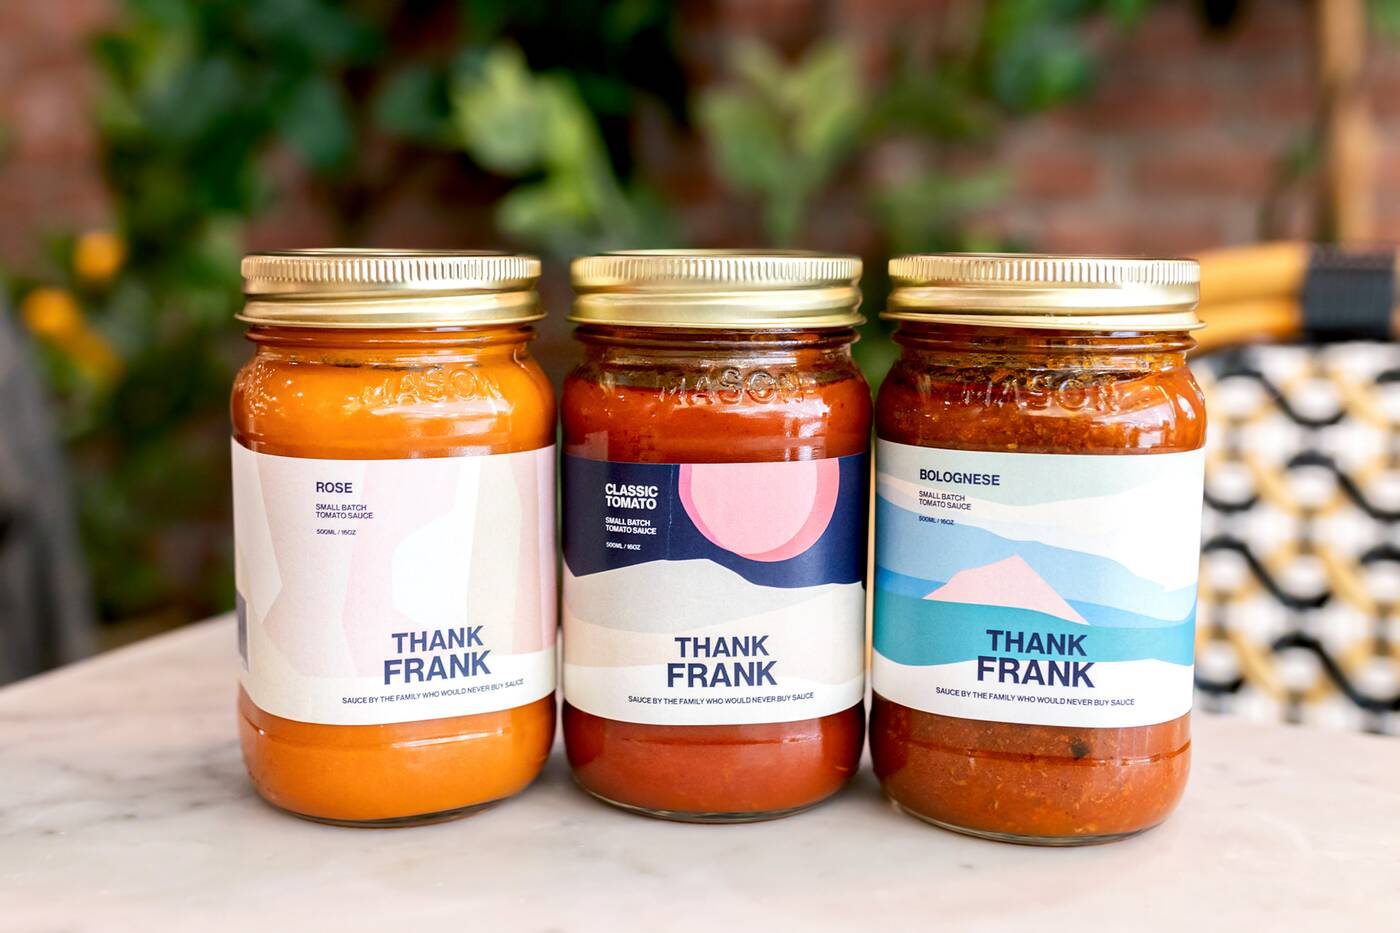 thank frank sauce toronto